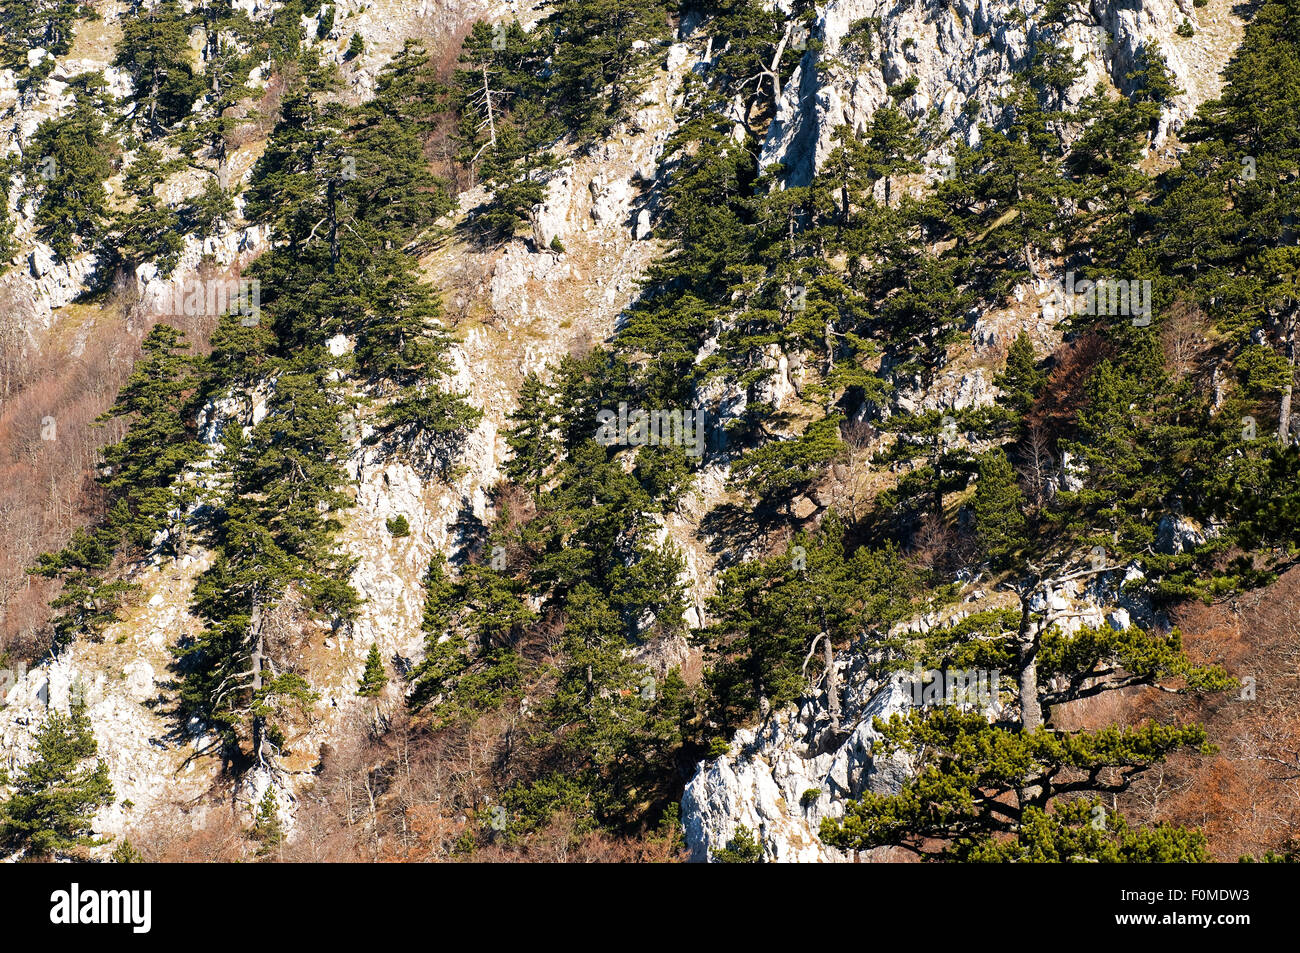 Bosnian pines (Pinus heldreichii / leucodermis) growing in rocky landscape, Pollino National Park, Basilicata, Italy, November 2008 Stock Photo